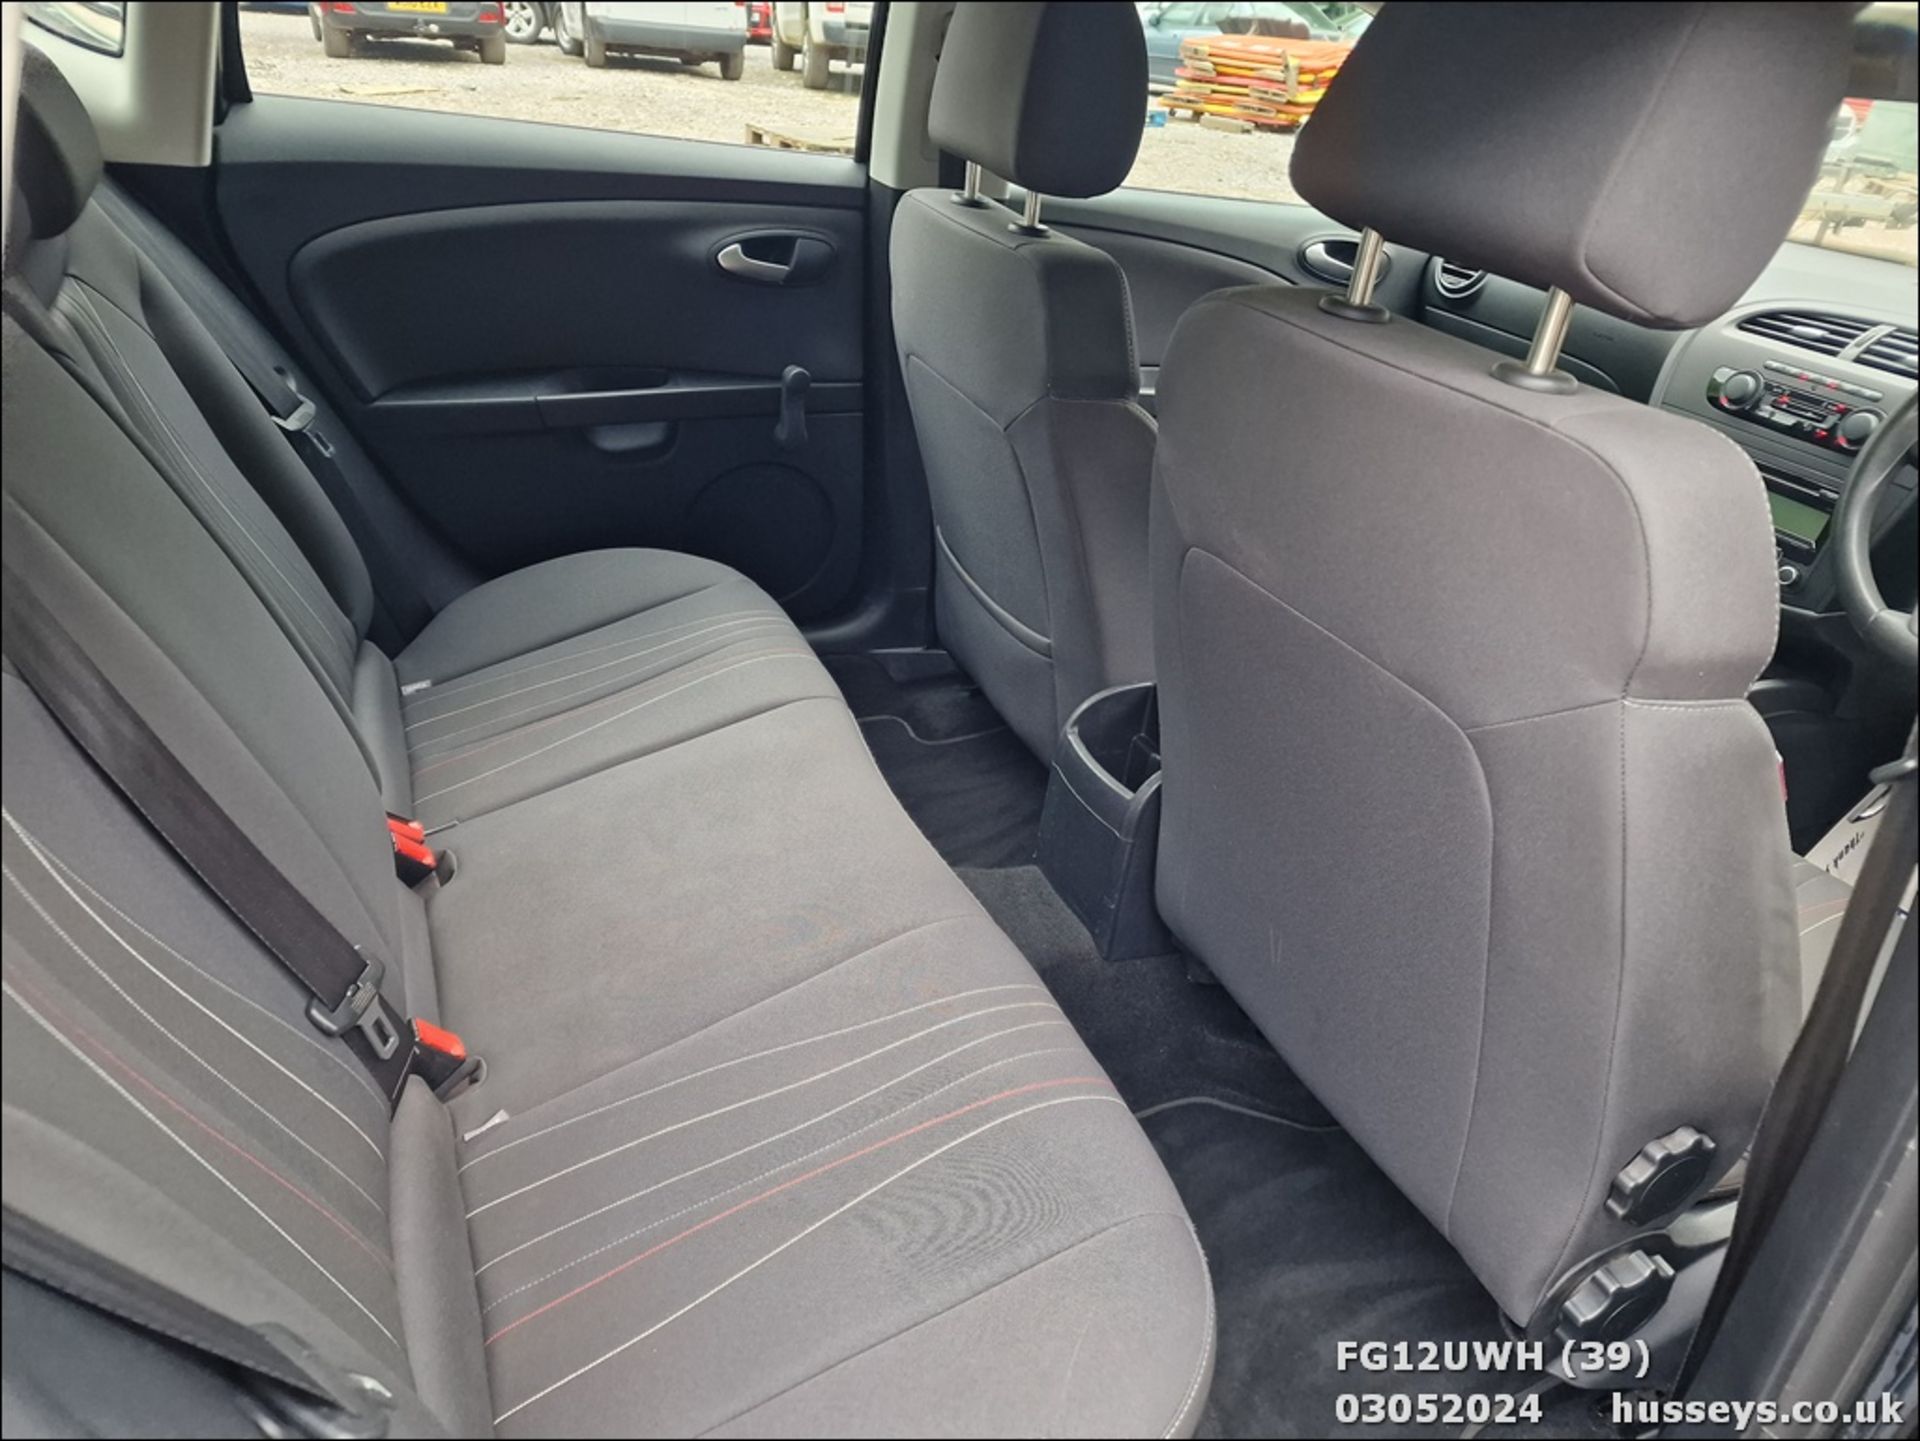 12/12 SEAT LEON S COPA CR TDI ECOMOT - 1598cc 5dr Hatchback (Black, 123k) - Image 40 of 45